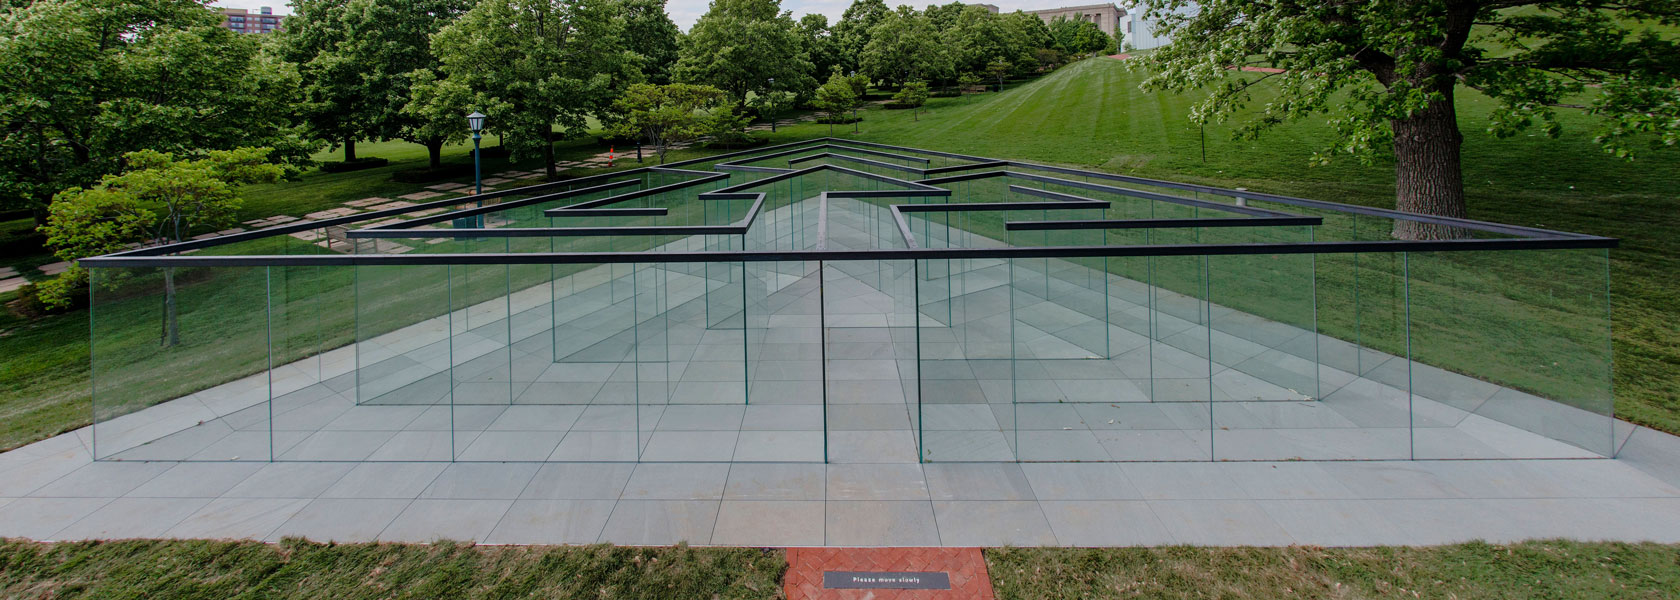 Il labirinto di vetro di Robert Morris al Nelson Atkins Museum of Art di Kansas City